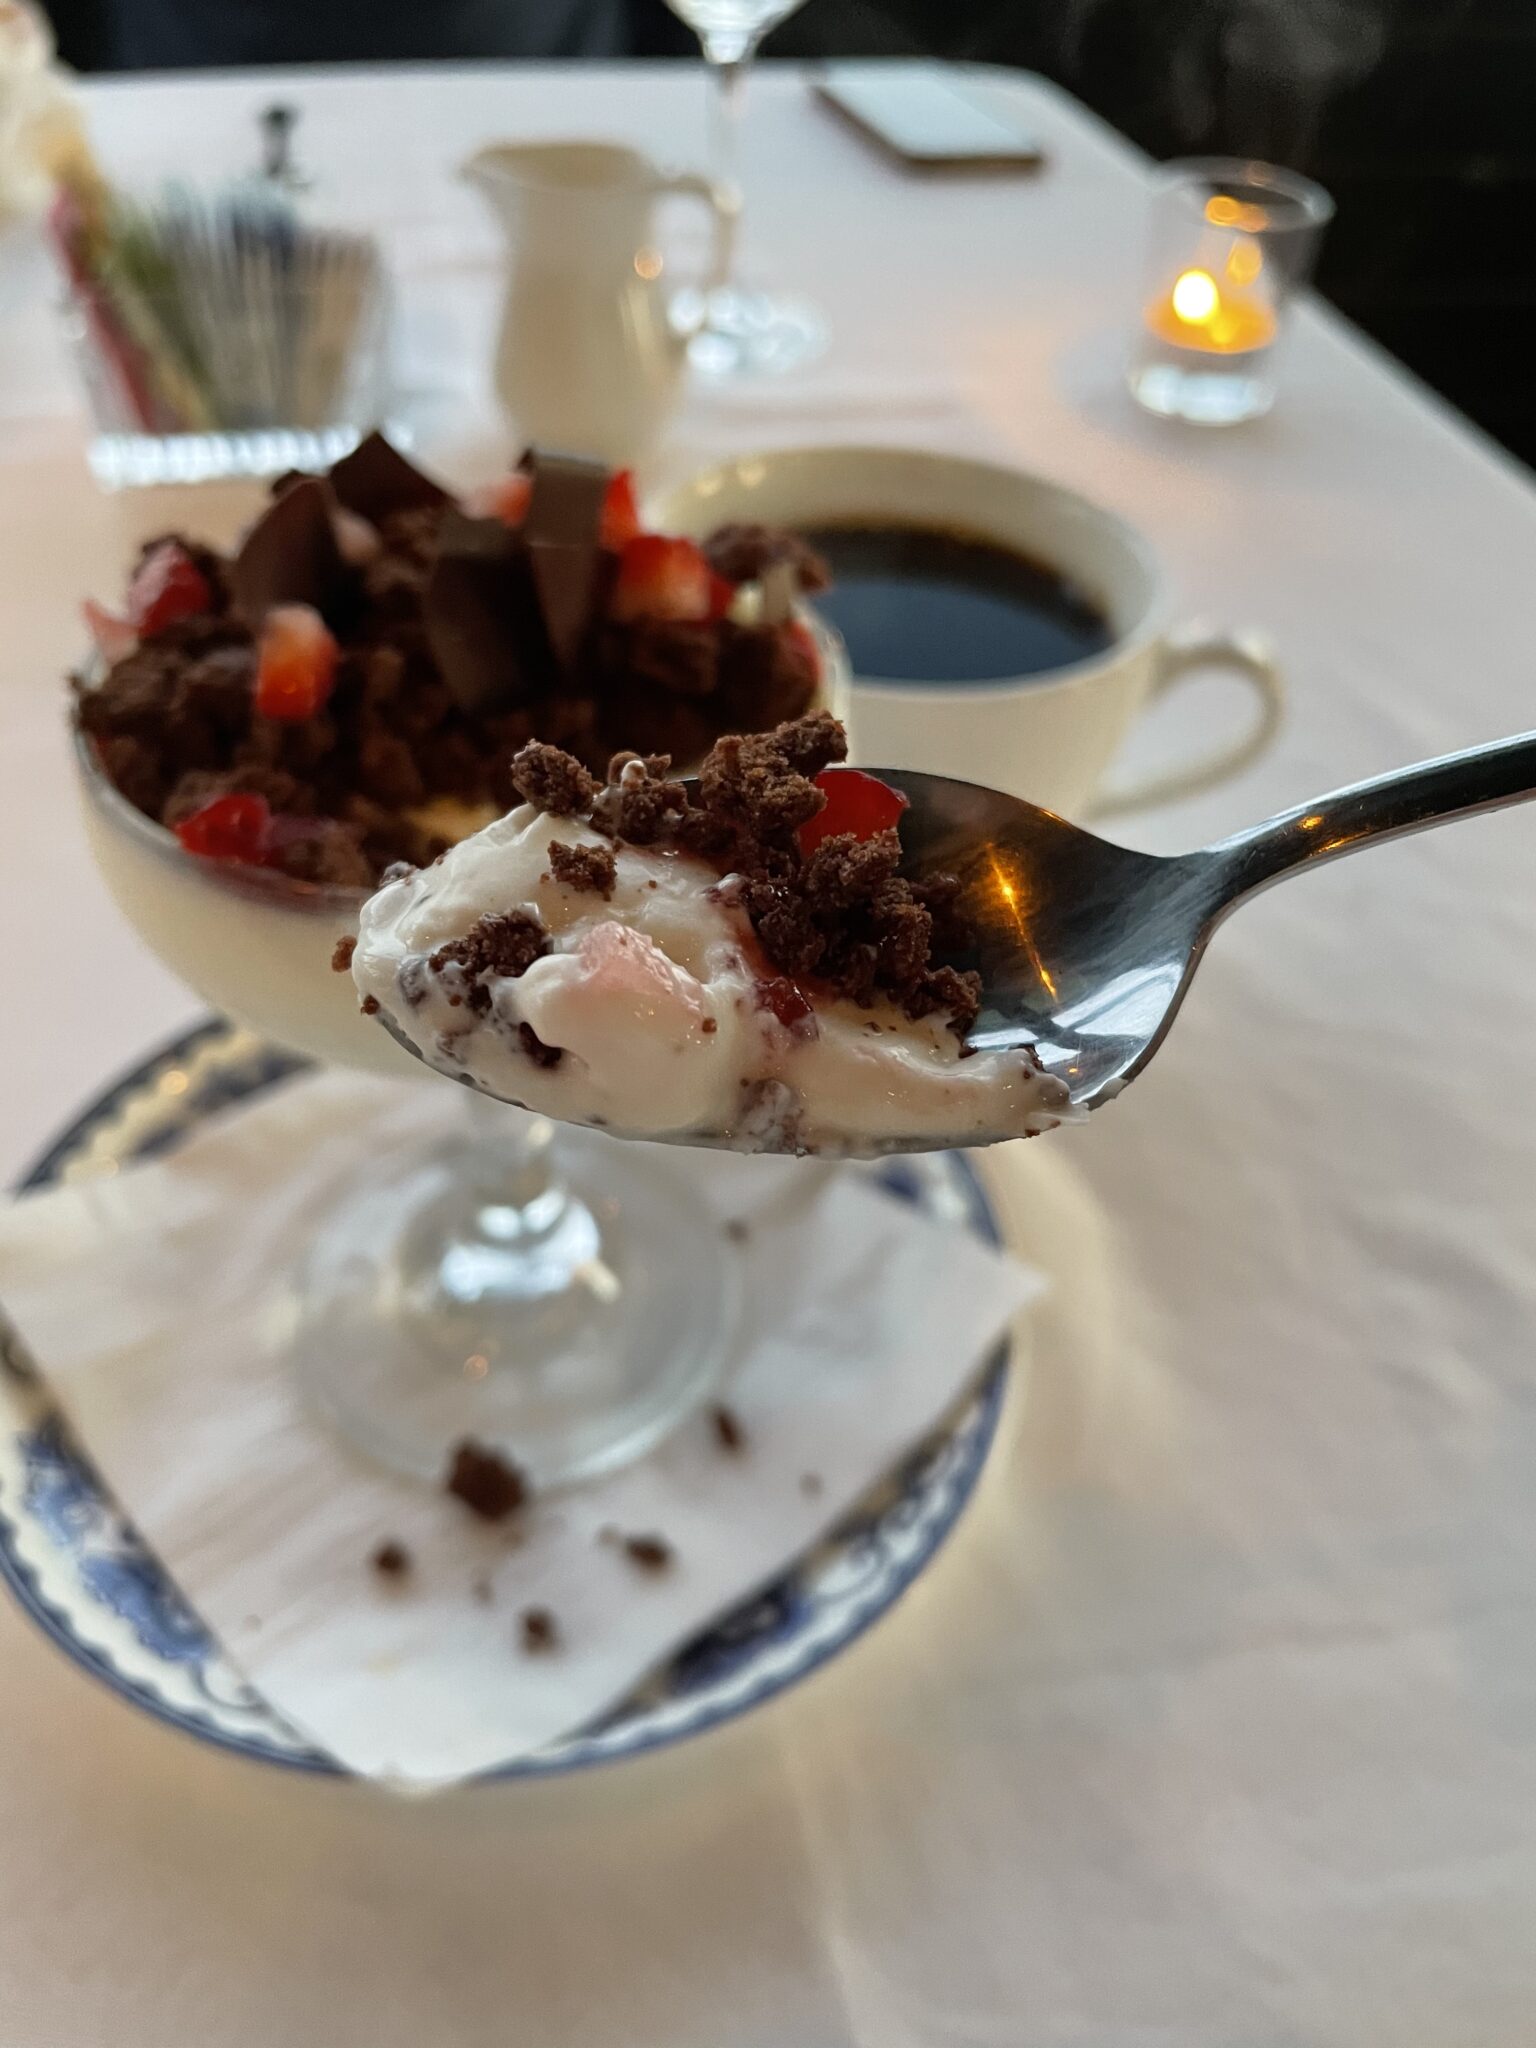 Vanilla Panna Cotta inspired by chocolate covered strawberries